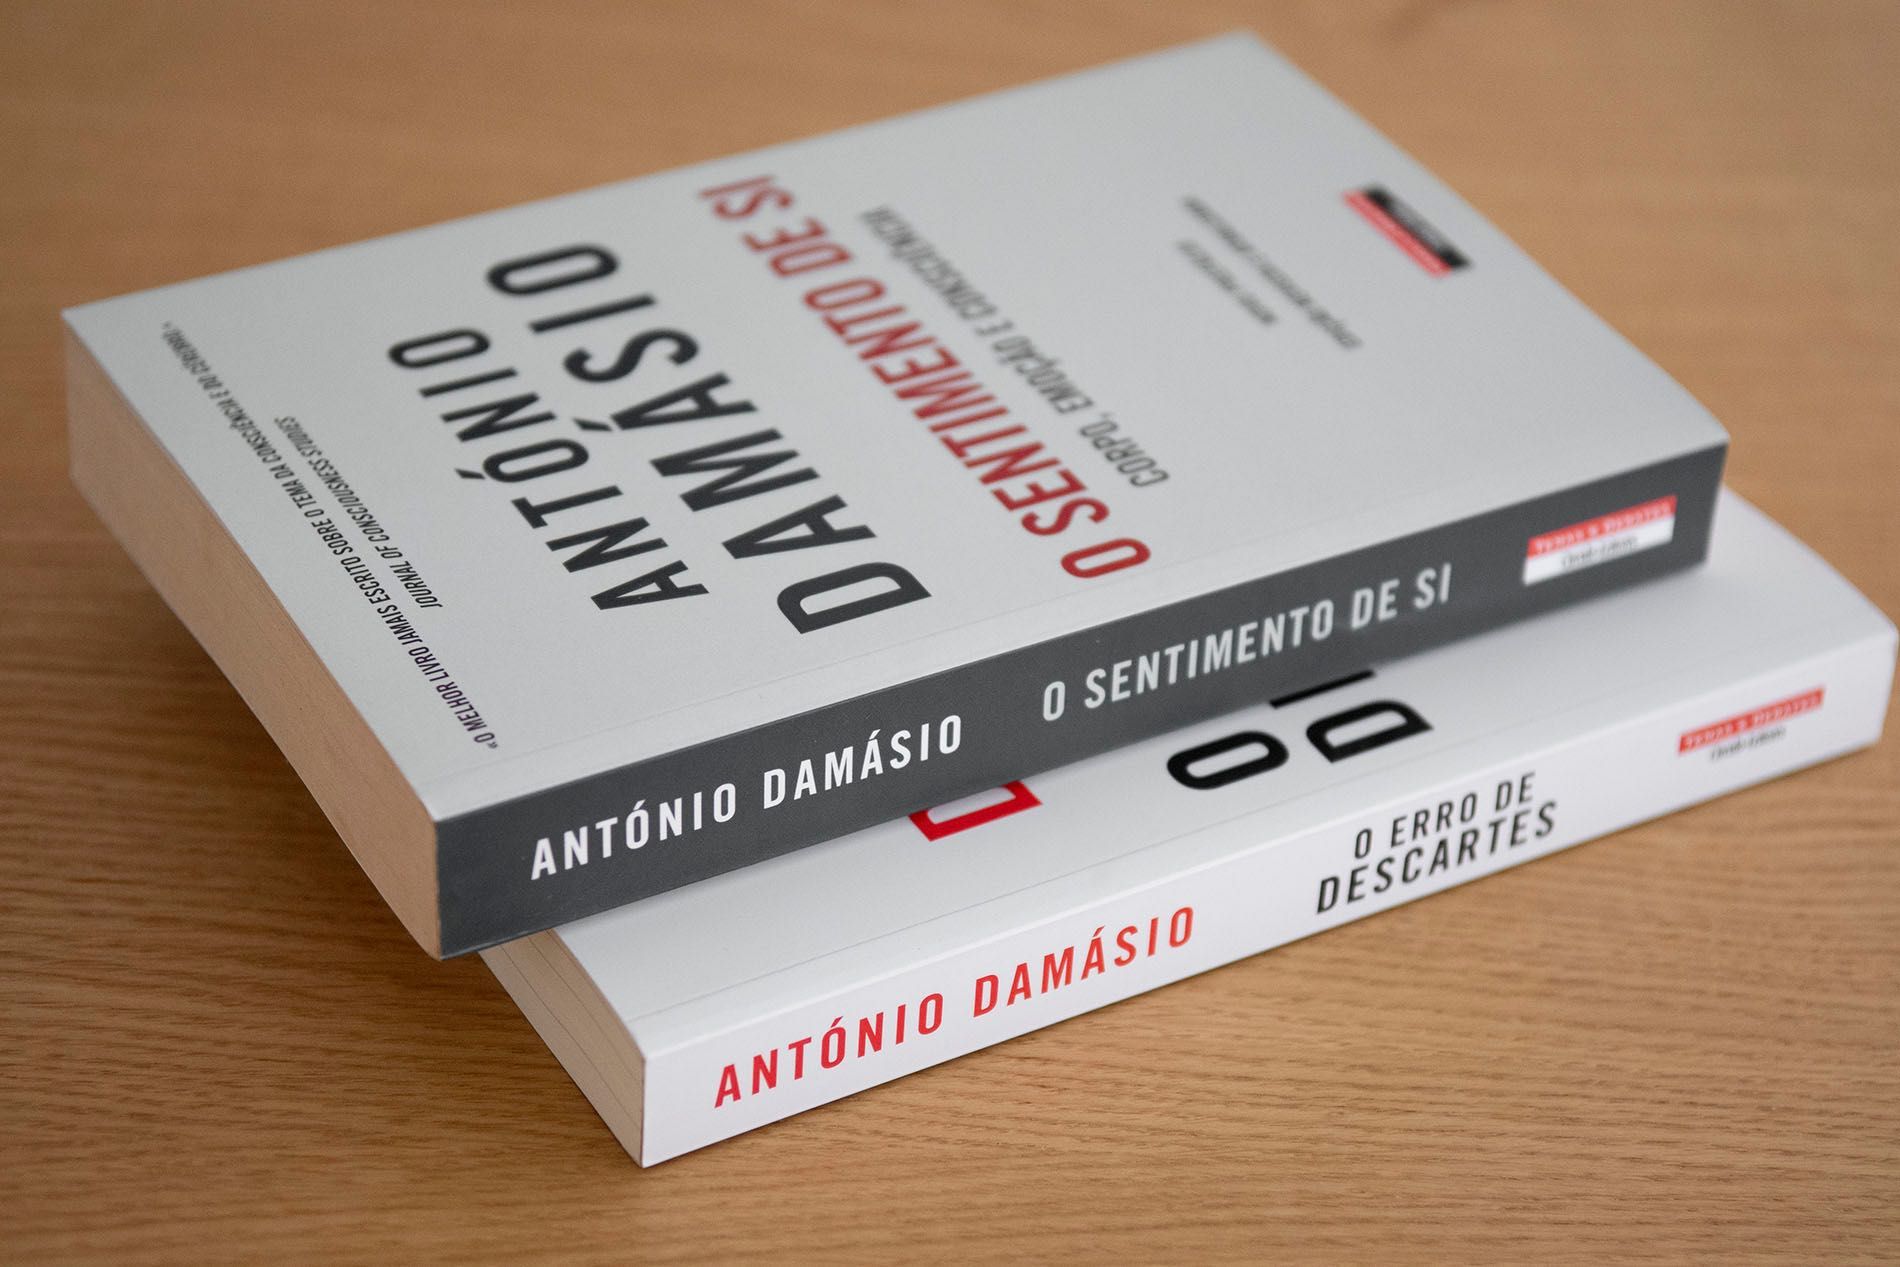 Lote de livros António Damásio